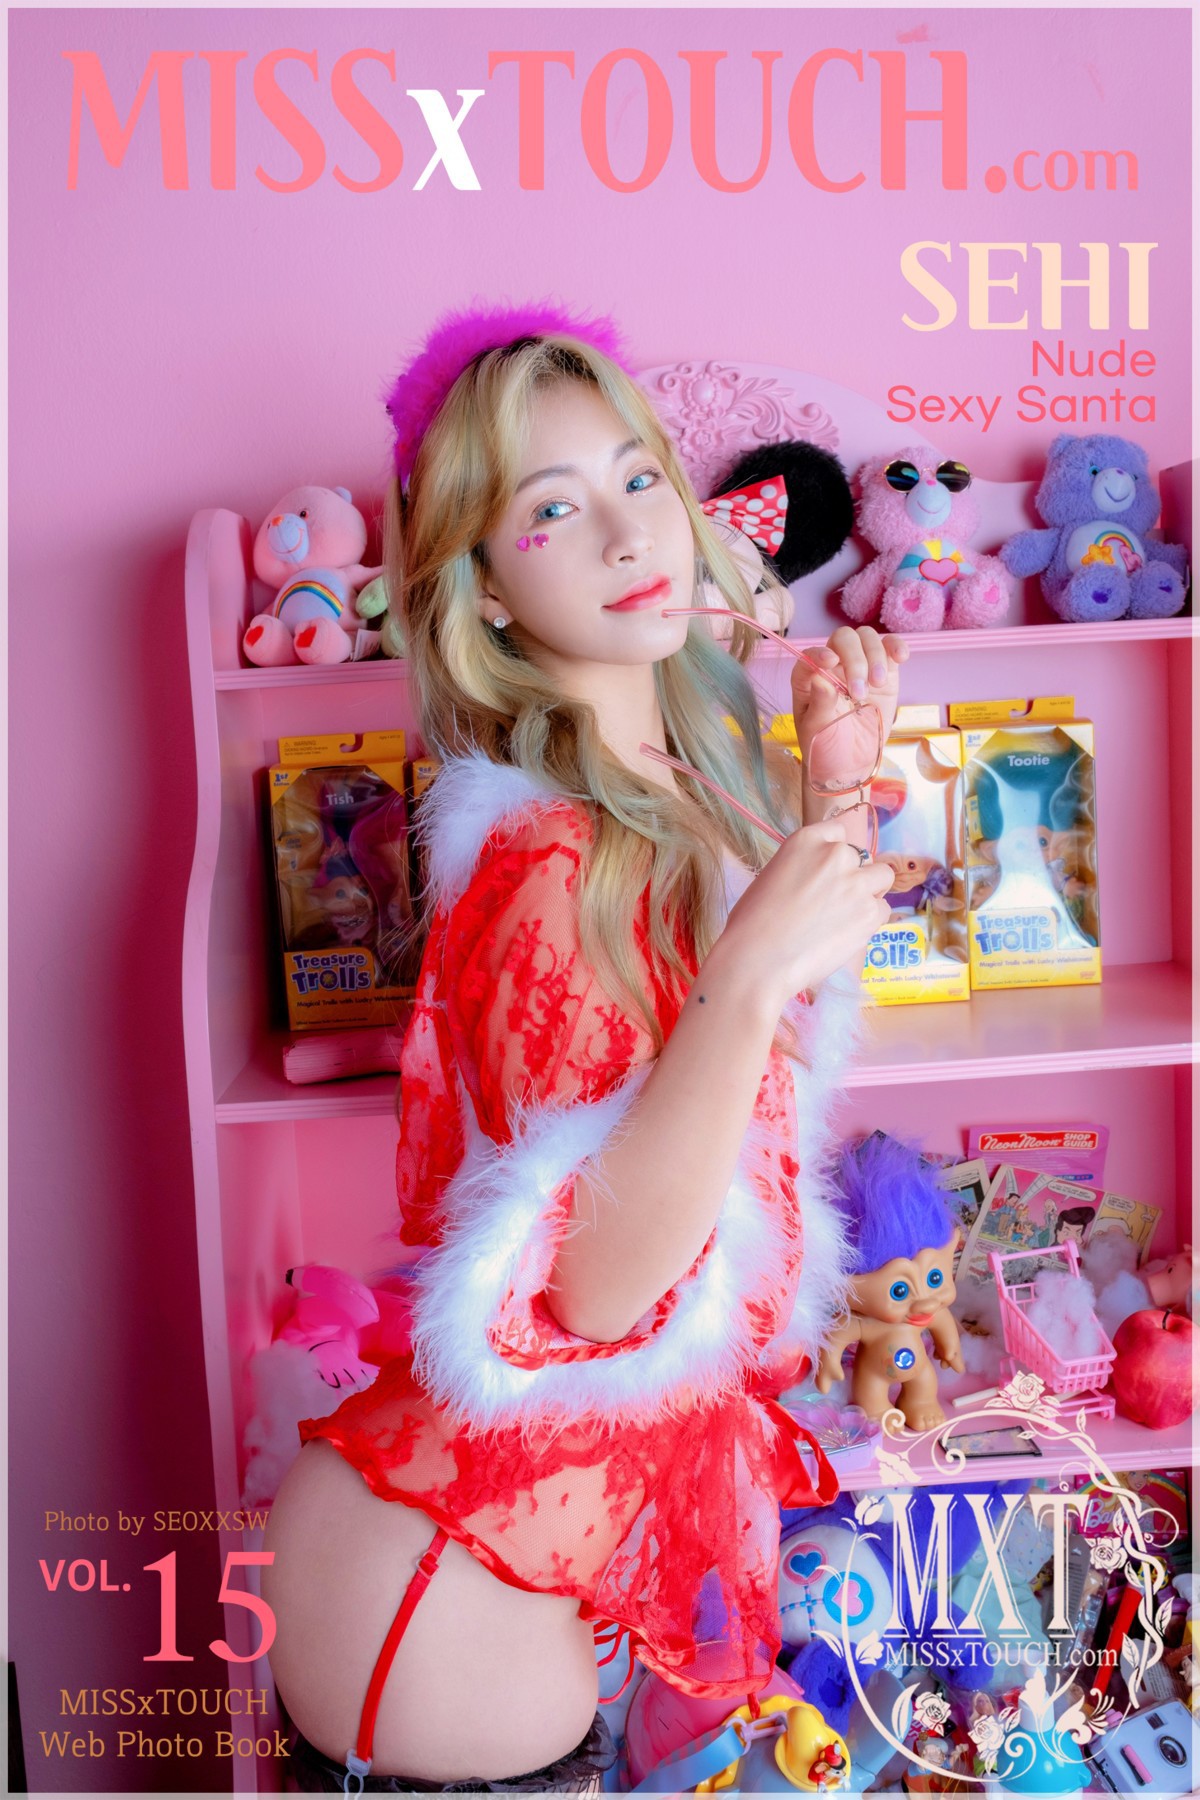 Sehi 세희, MISS TOUCH Vol.15 &#8220;Sexy Santa&#8221; Set.02